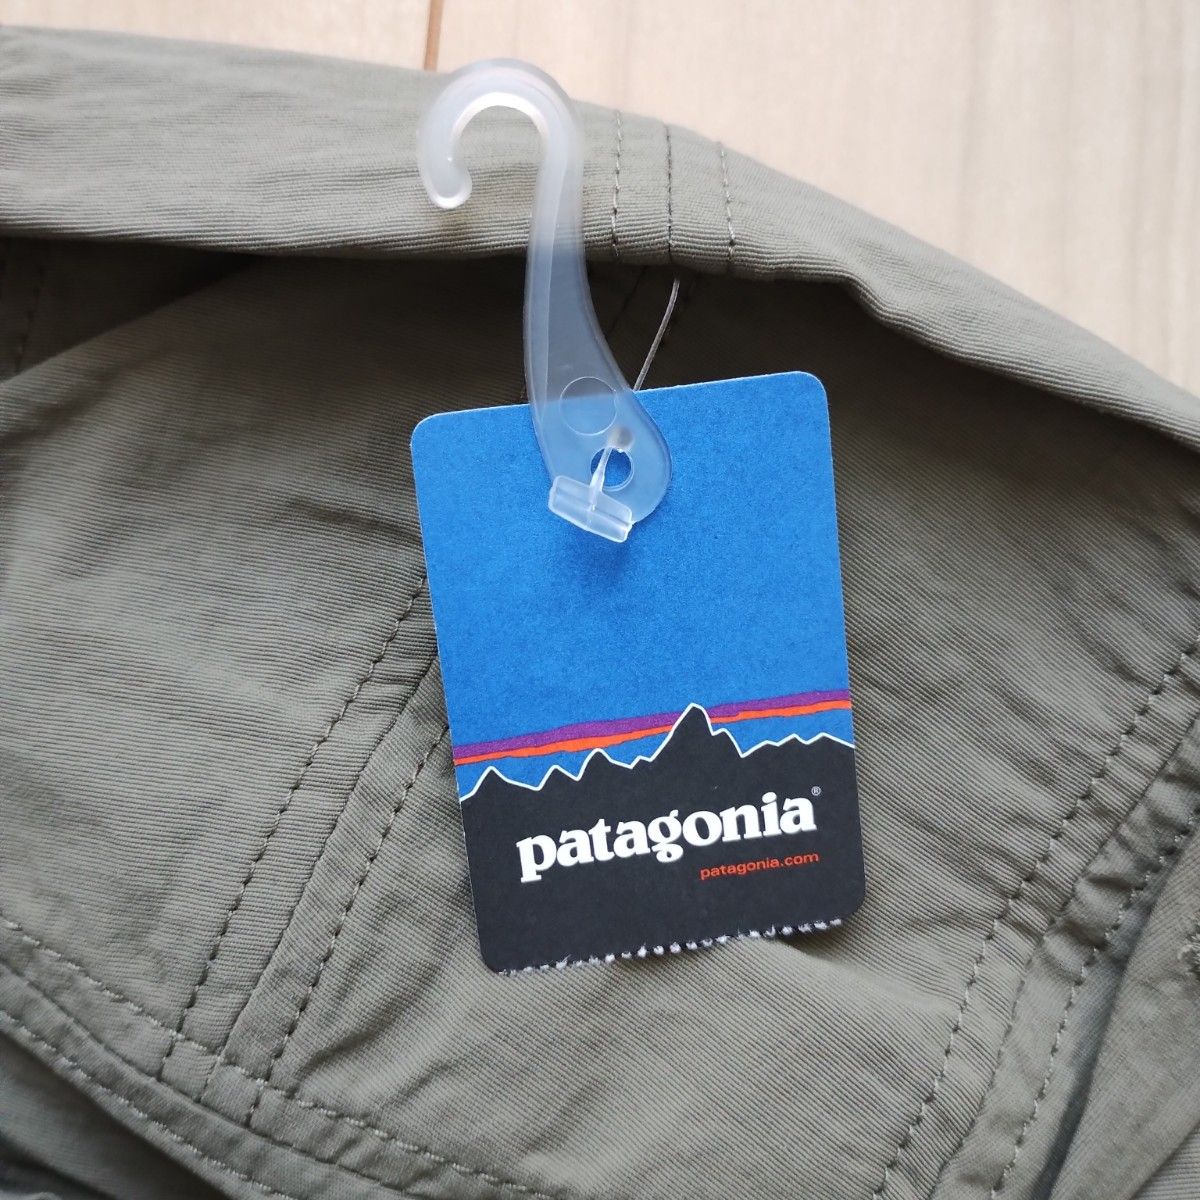 Patagonia パタゴニア 08年製 新品 未使用品 Surf Cap 帽子 キャップ サーフィン カヌー カヤック 海